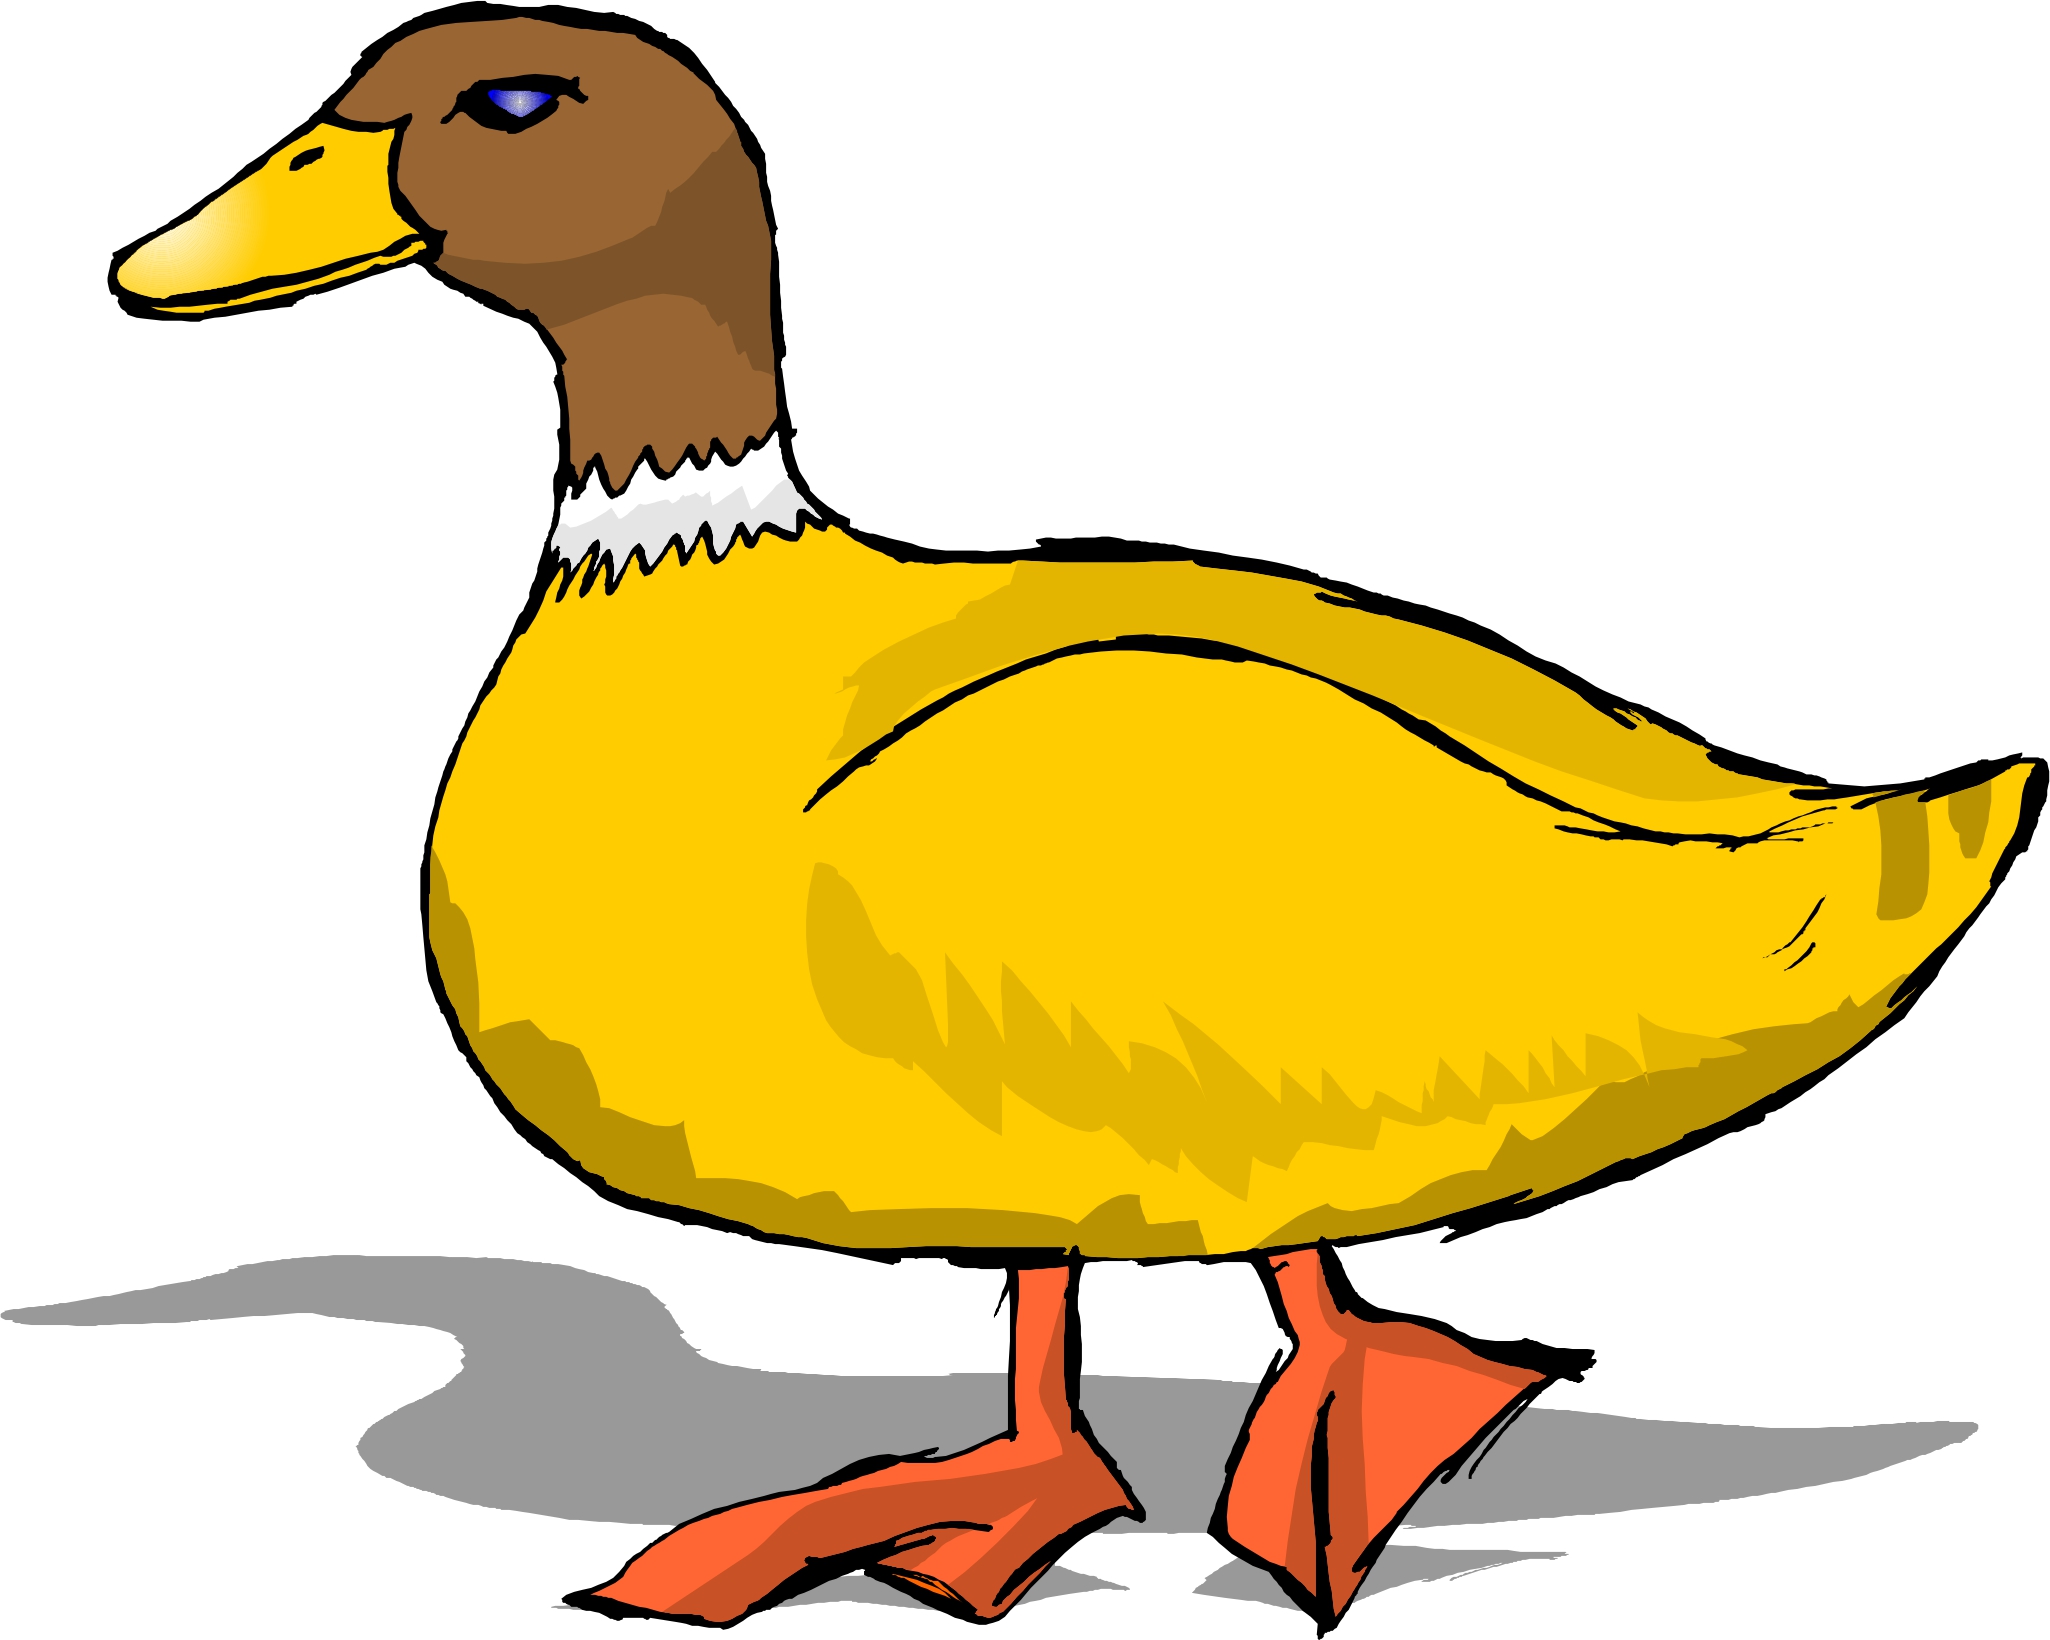 Cartoon Duck Images - ClipArt Best